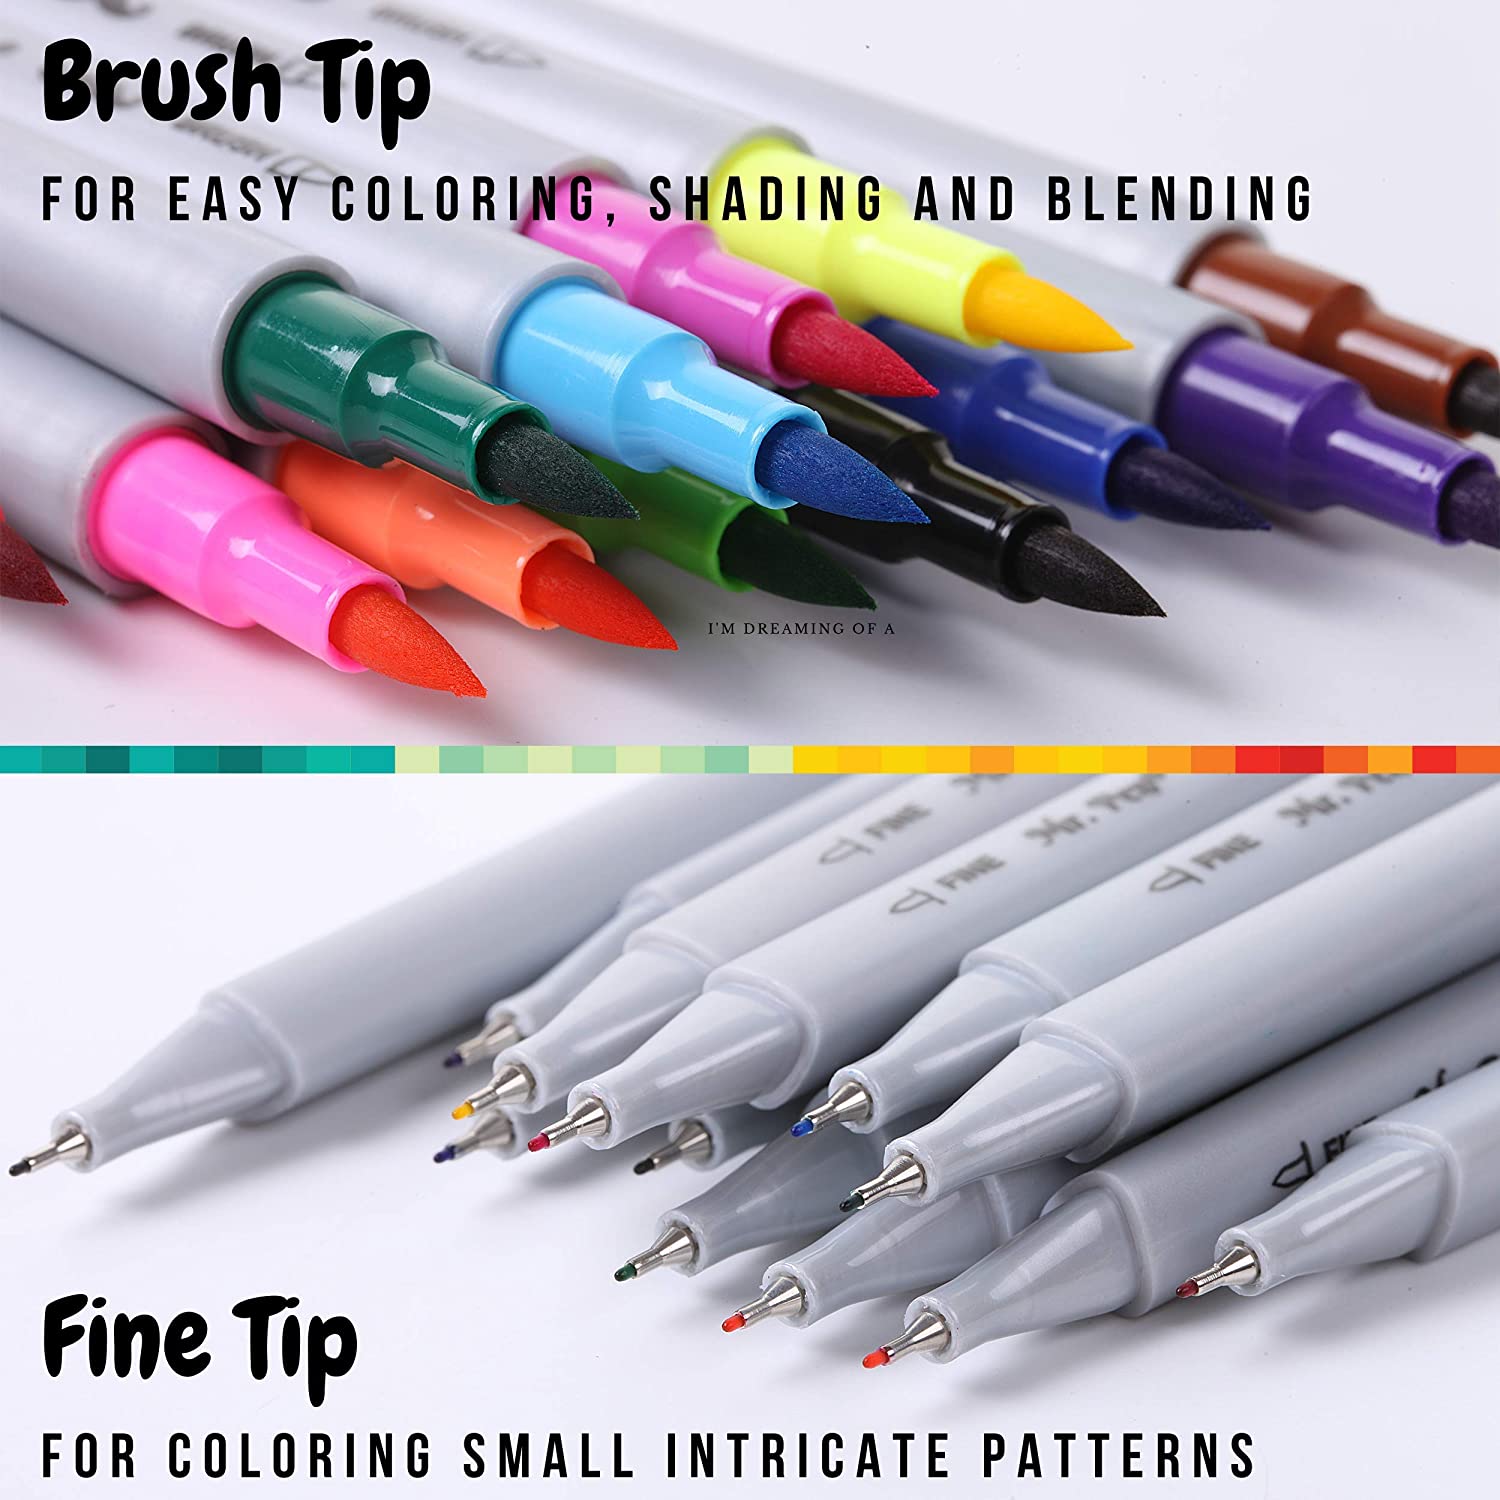 Mr. Pen- Dual Tip Brush Pens, 12 Colors - Mr. Pen Store